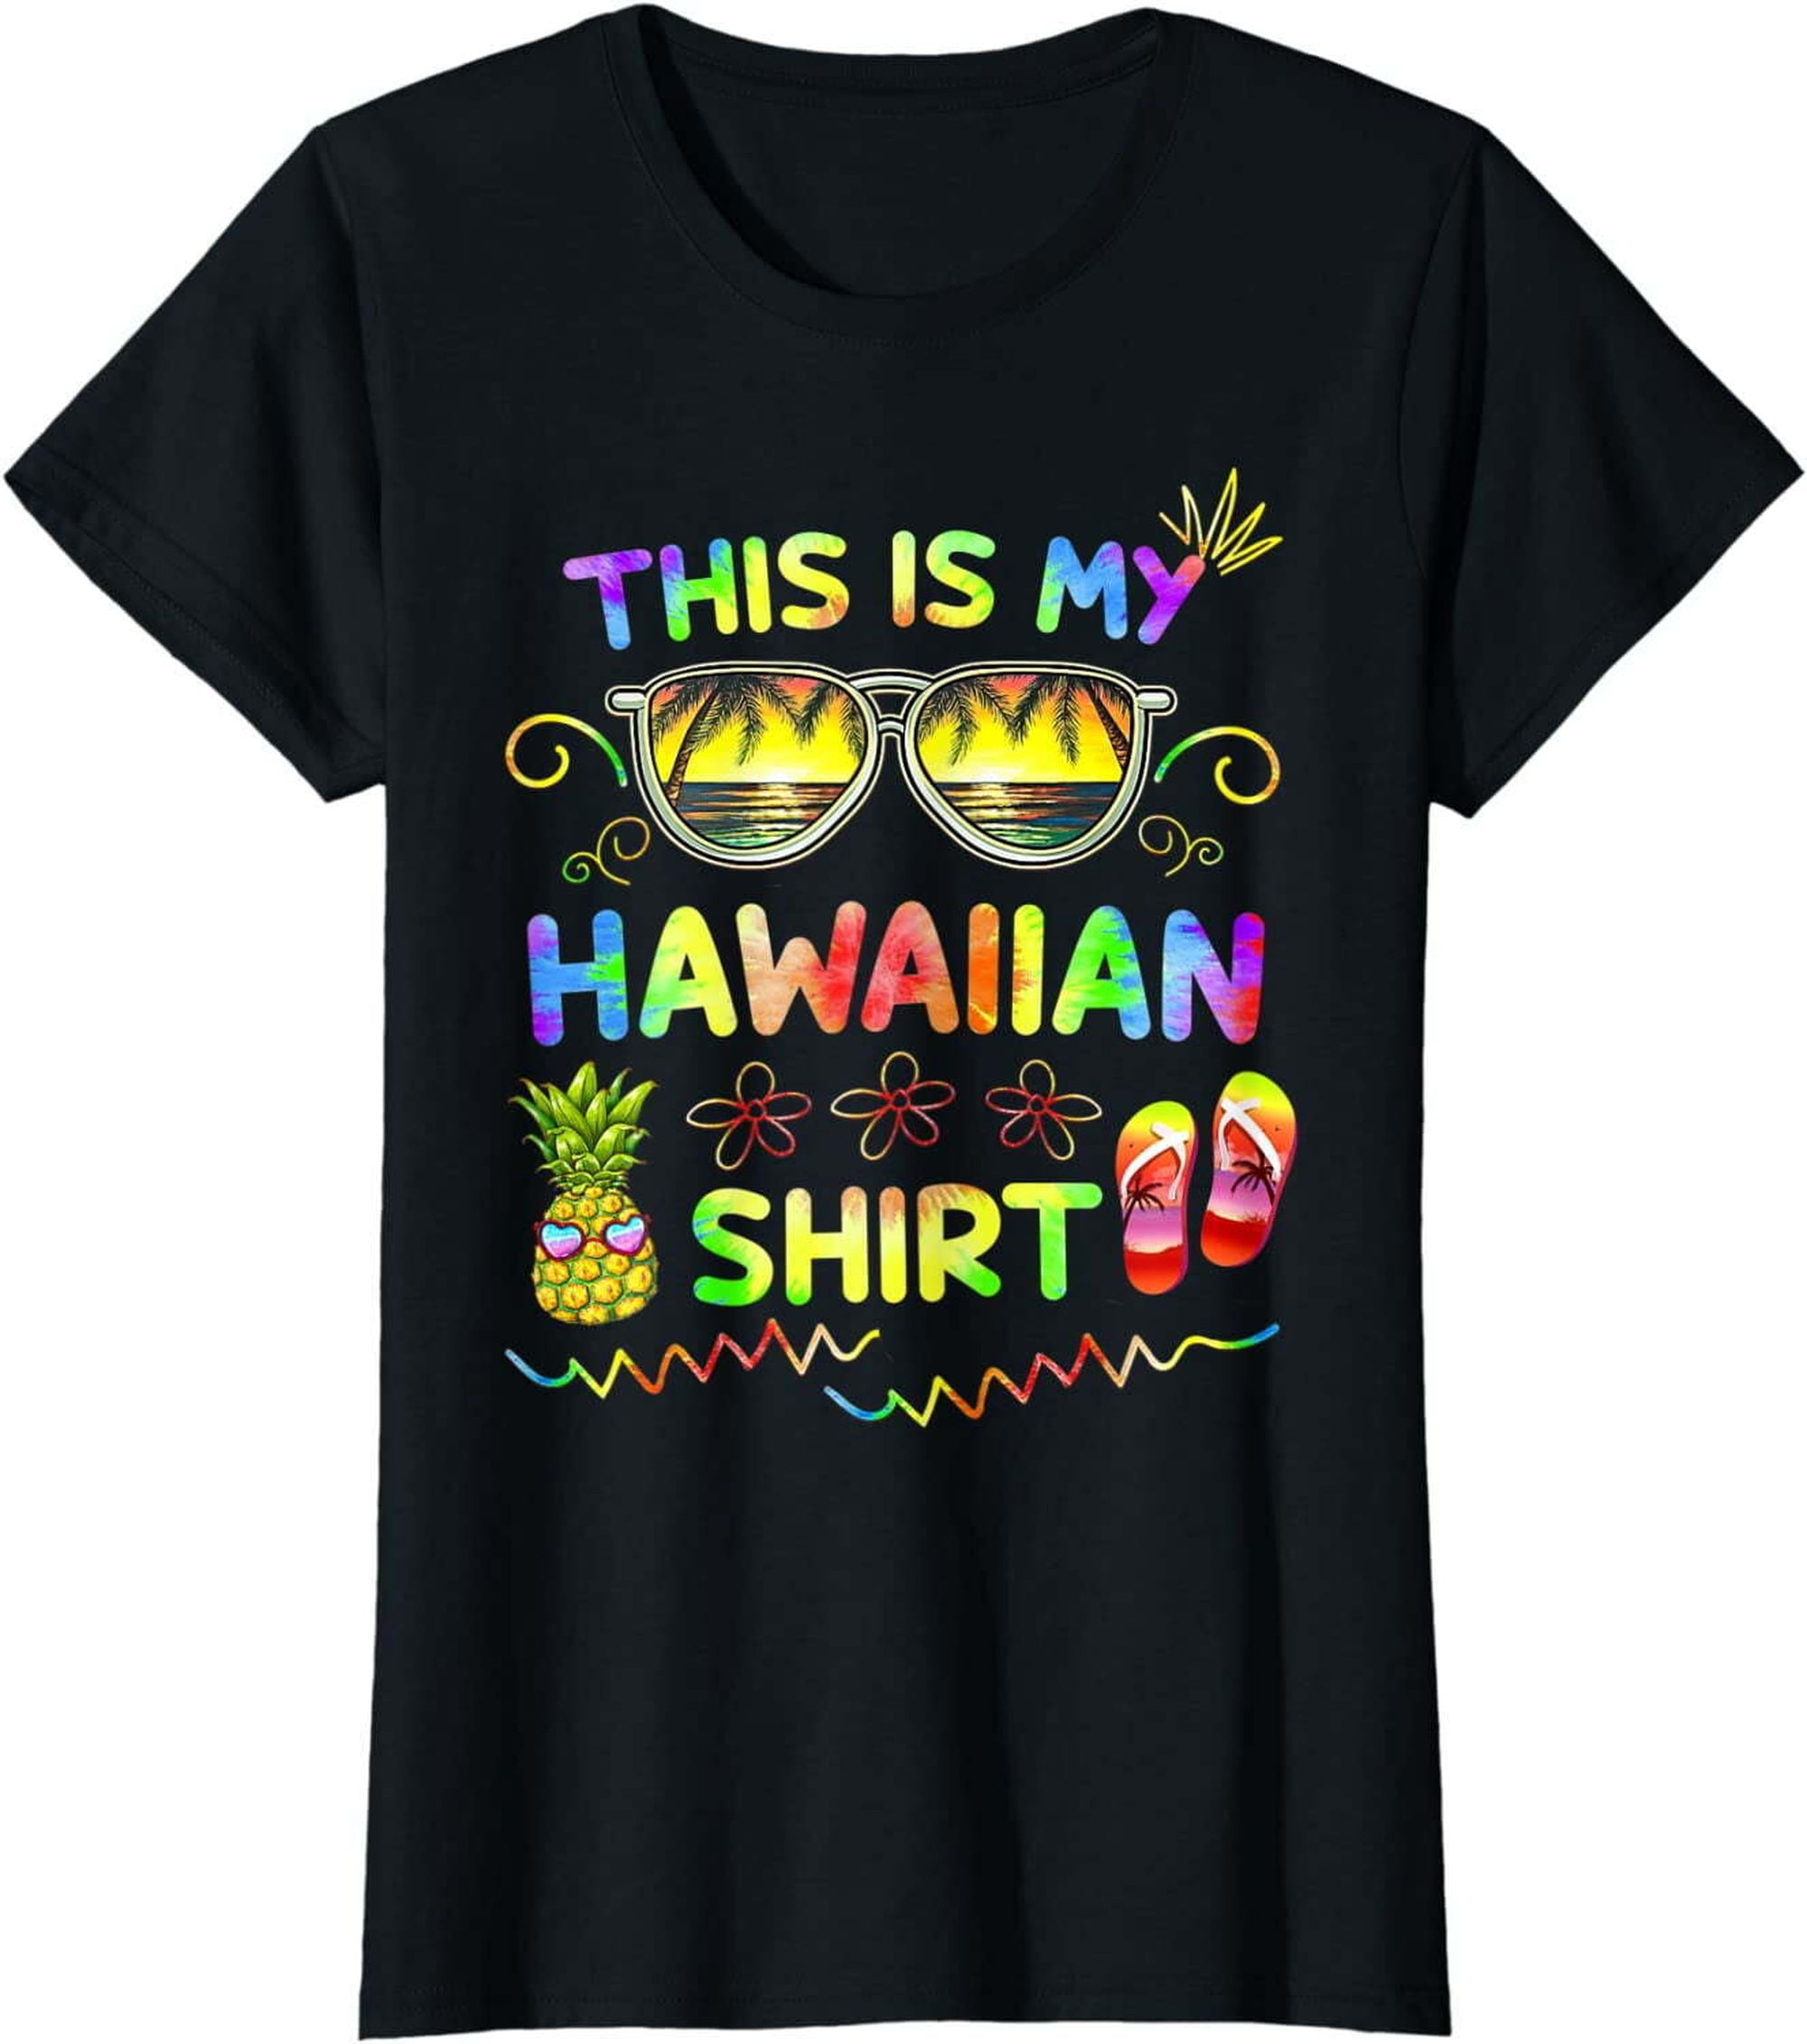 Island Vibes: Vibrant Hawaiian Shirt for Beach Party Fun in the Sun ...